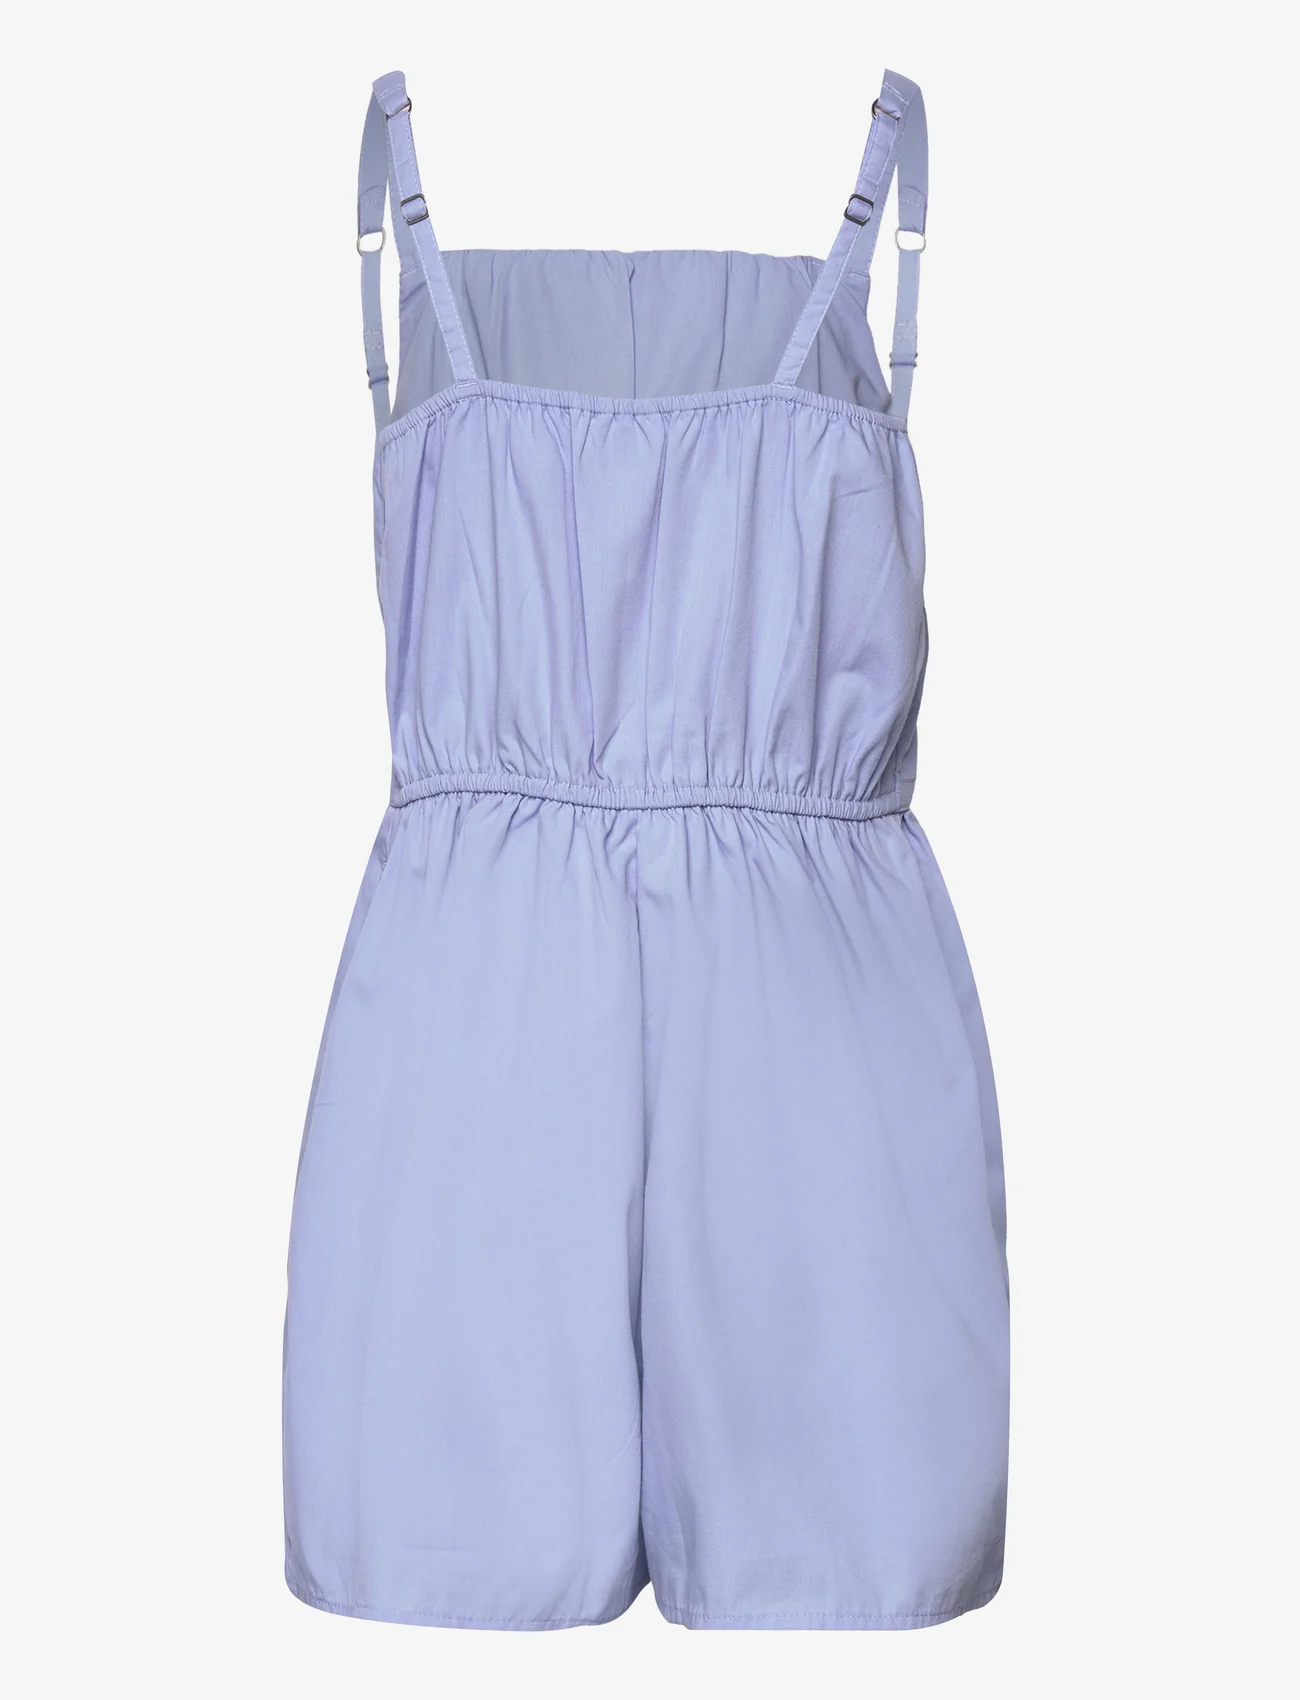 Abercrombie & Fitch - kids GIRLS DRESSES - byxdress - blue heron solid - 1